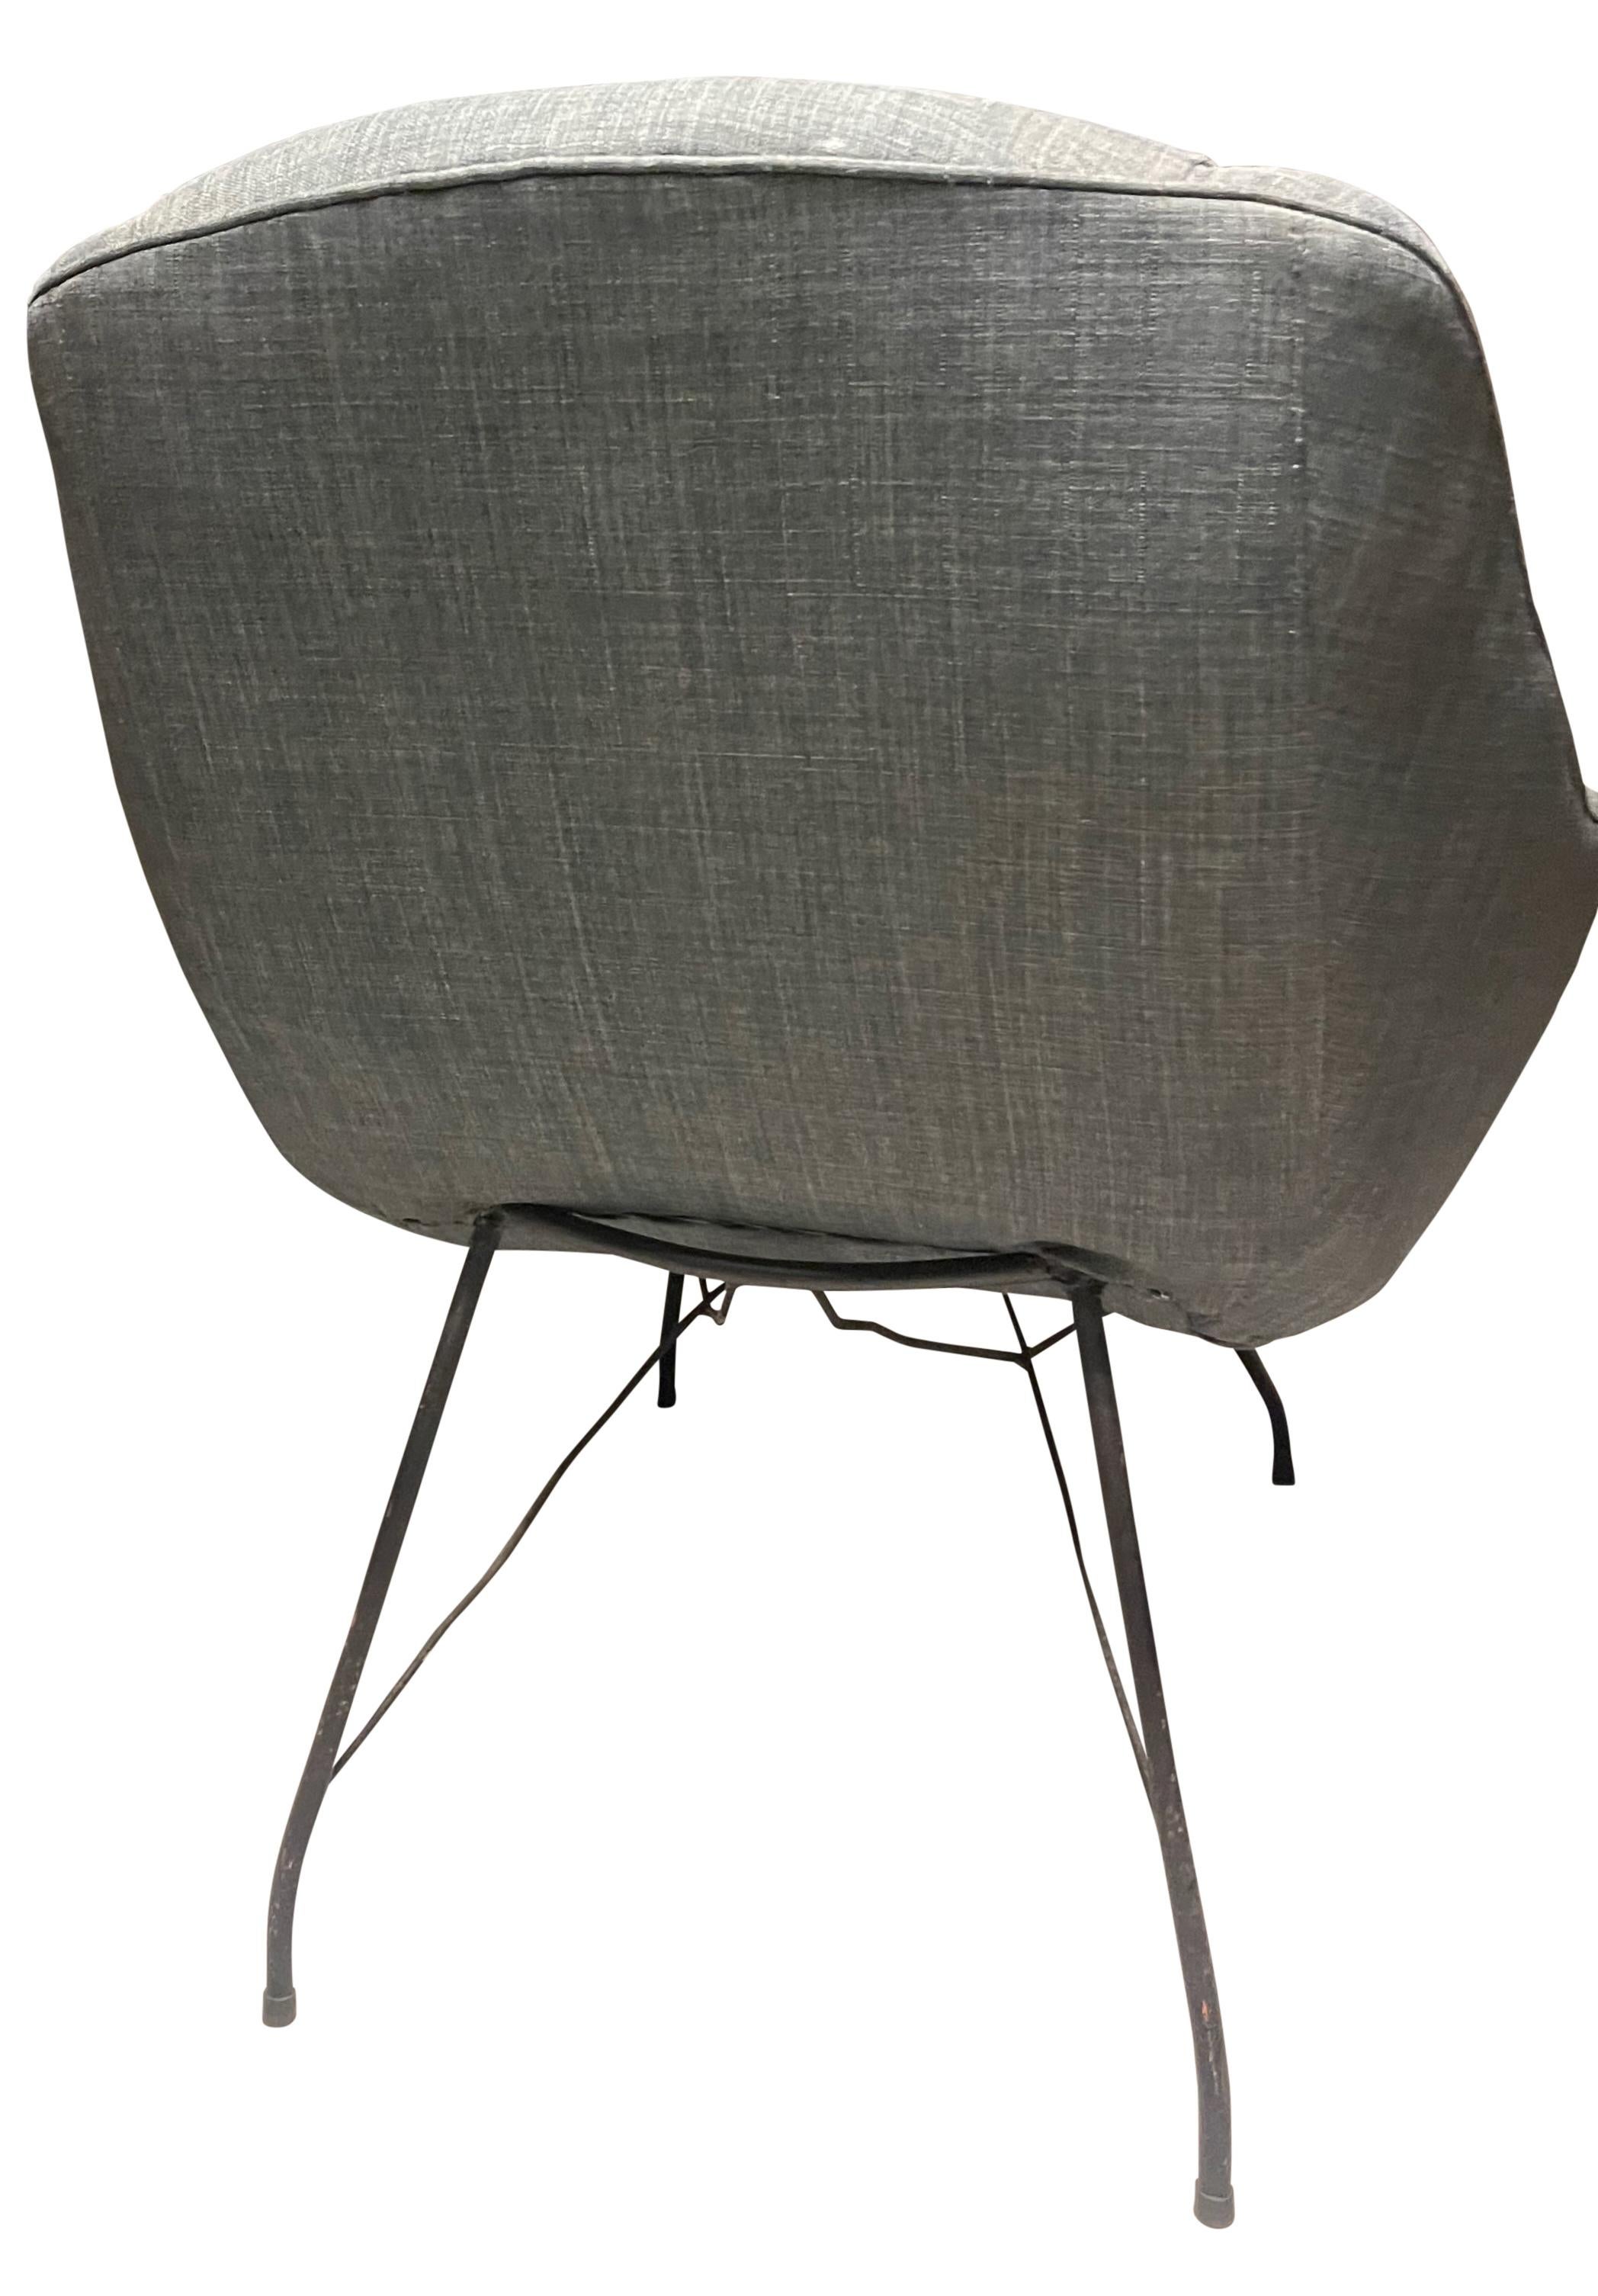 Metal Carlo Hauner Martin Eisler Concha Lounge Chair, Brazil, 1950 For Sale